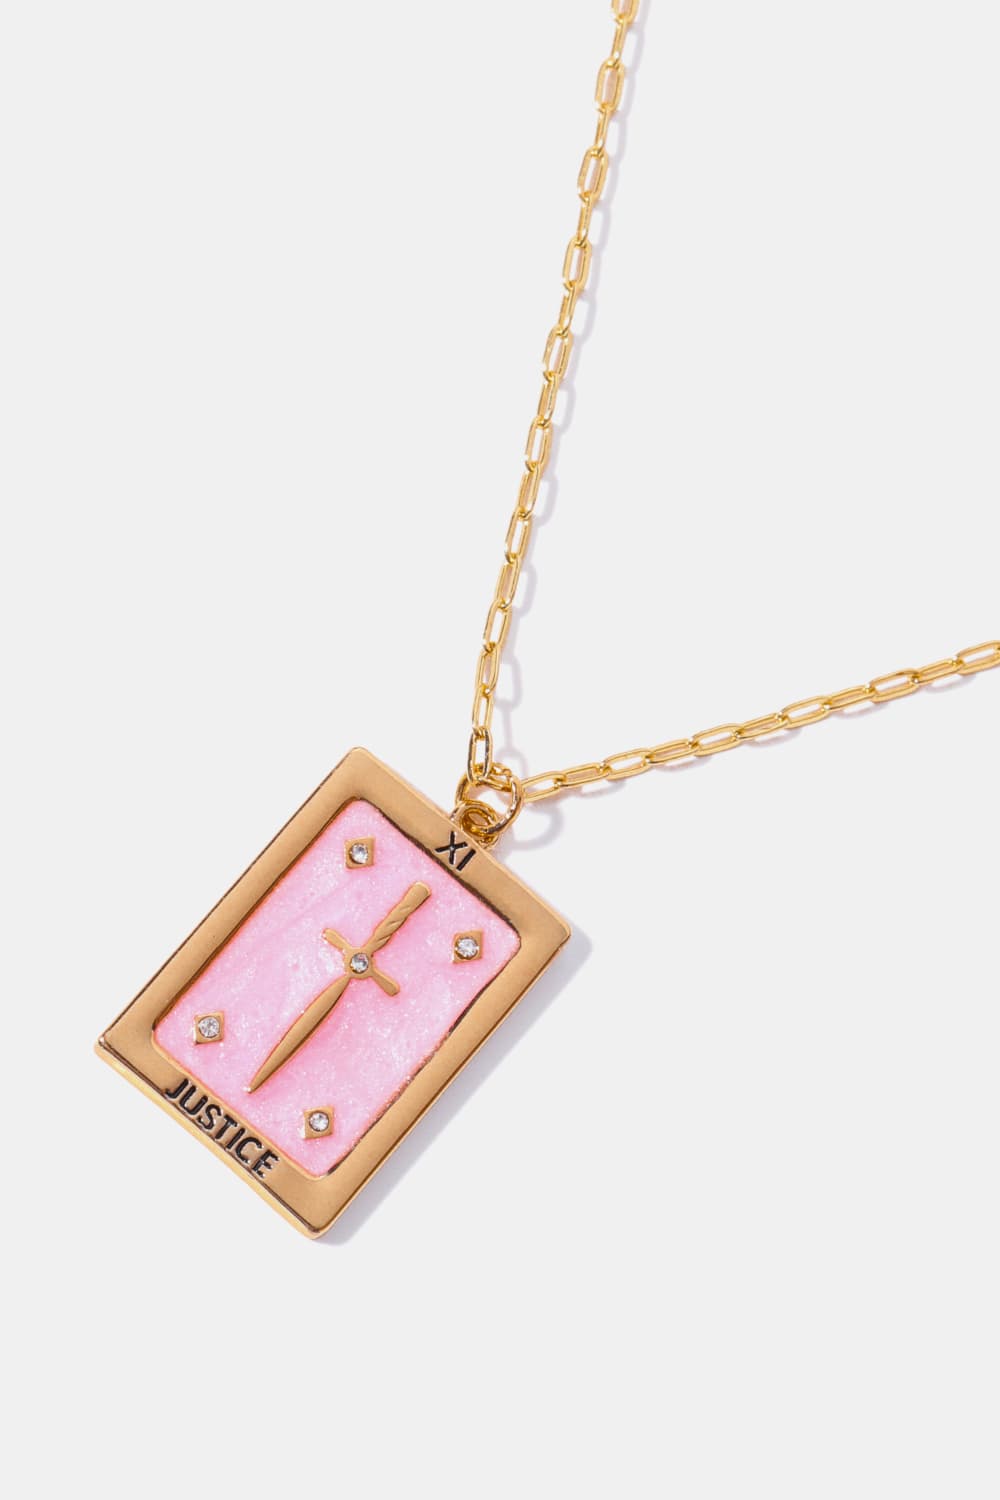 Tarot Card Pendant Copper Necklace - FunkyPeacockStore (Store description)